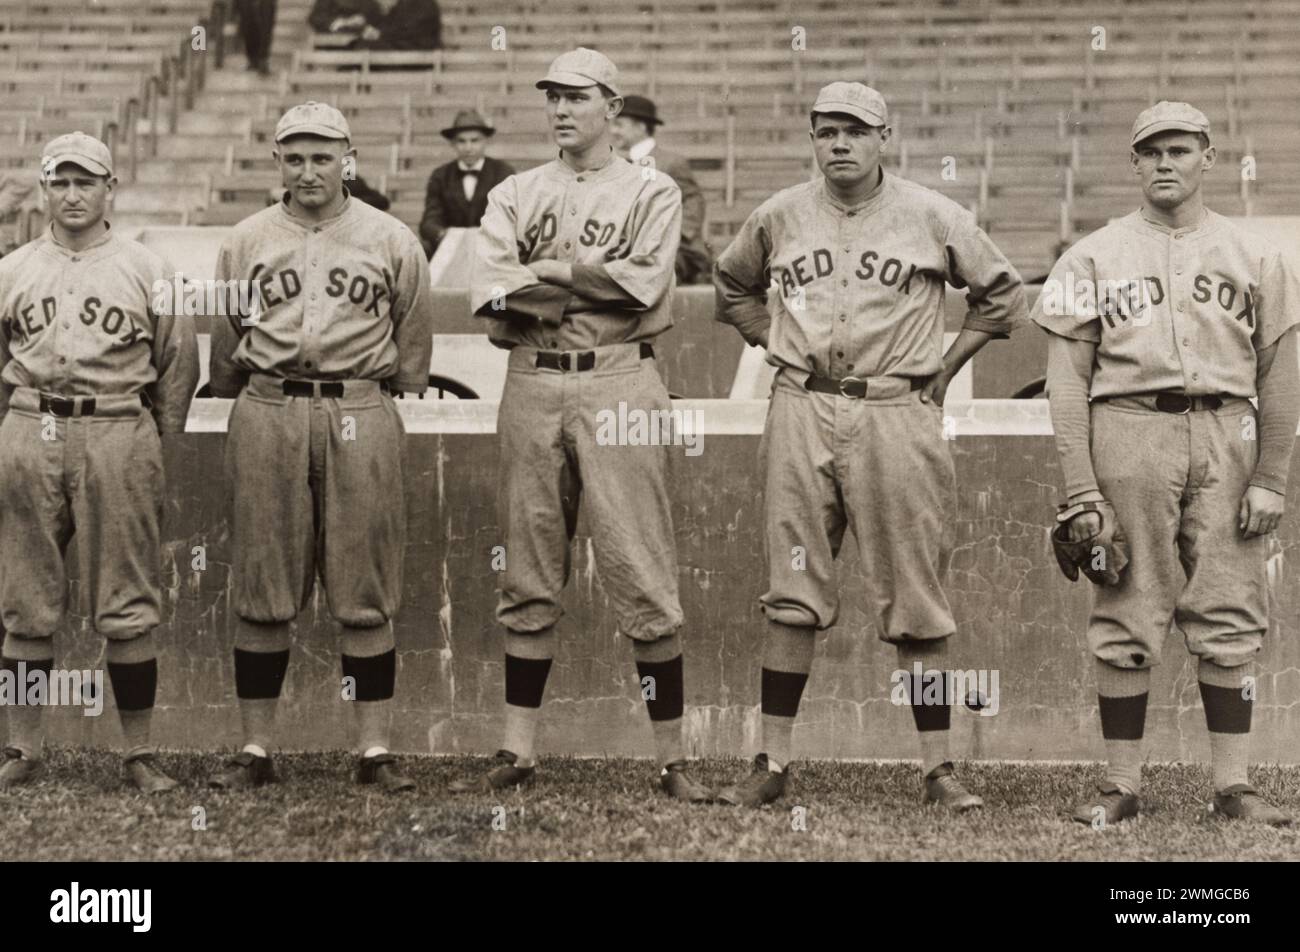 1915. Babe Ruth et autres pichets Red Sox, photographiés de gauche à droite George Foster, Carl William Mays, Ernest Shore, 'Babe' Ruth, Hubert Benjamin Leonard. Banque D'Images